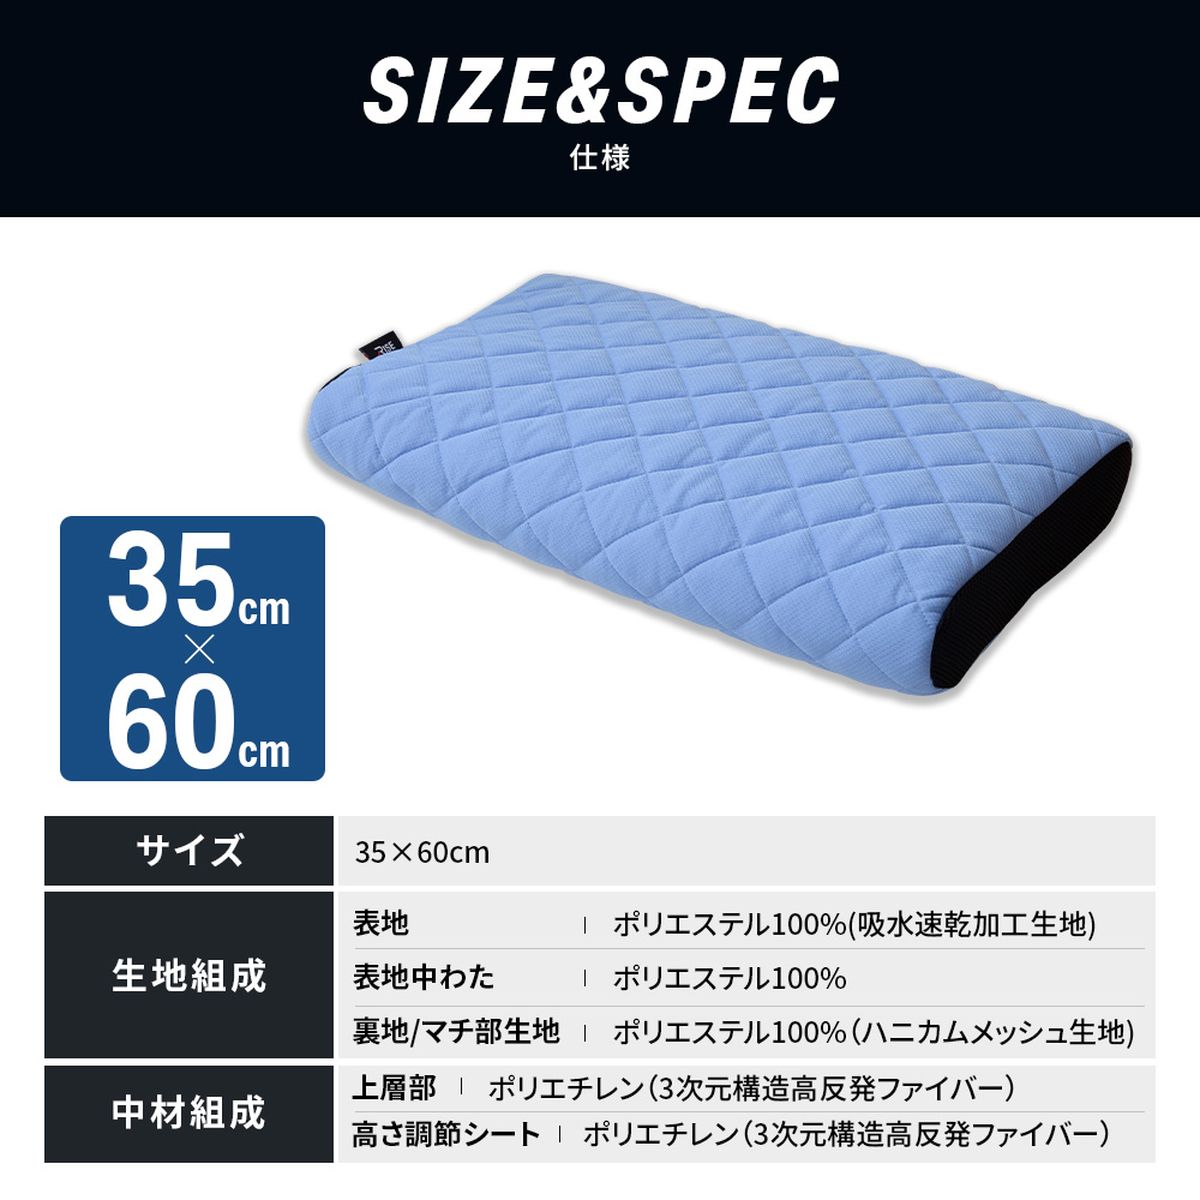 RISE Sleep Niceday 桑田真澄式 動的睡眠 高さ調整高反発ピロー 35×60cm グレー